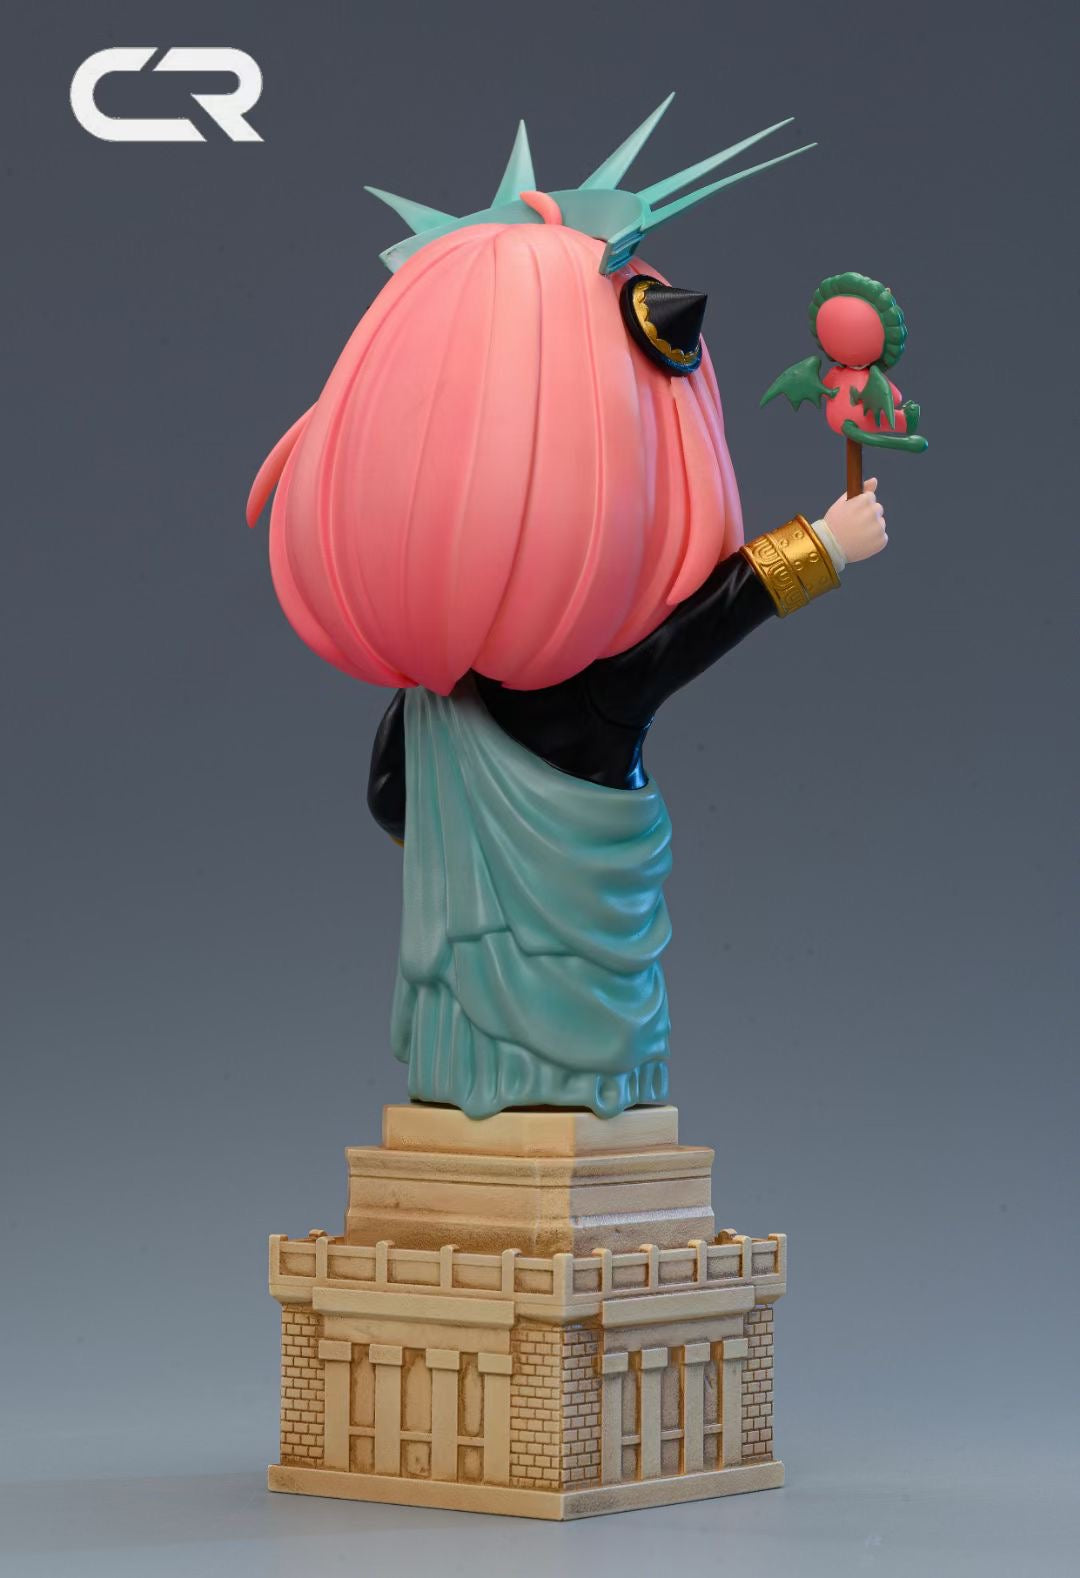 CR Studio - Statue of Liberty Anya | 自由女神 阿尼亚